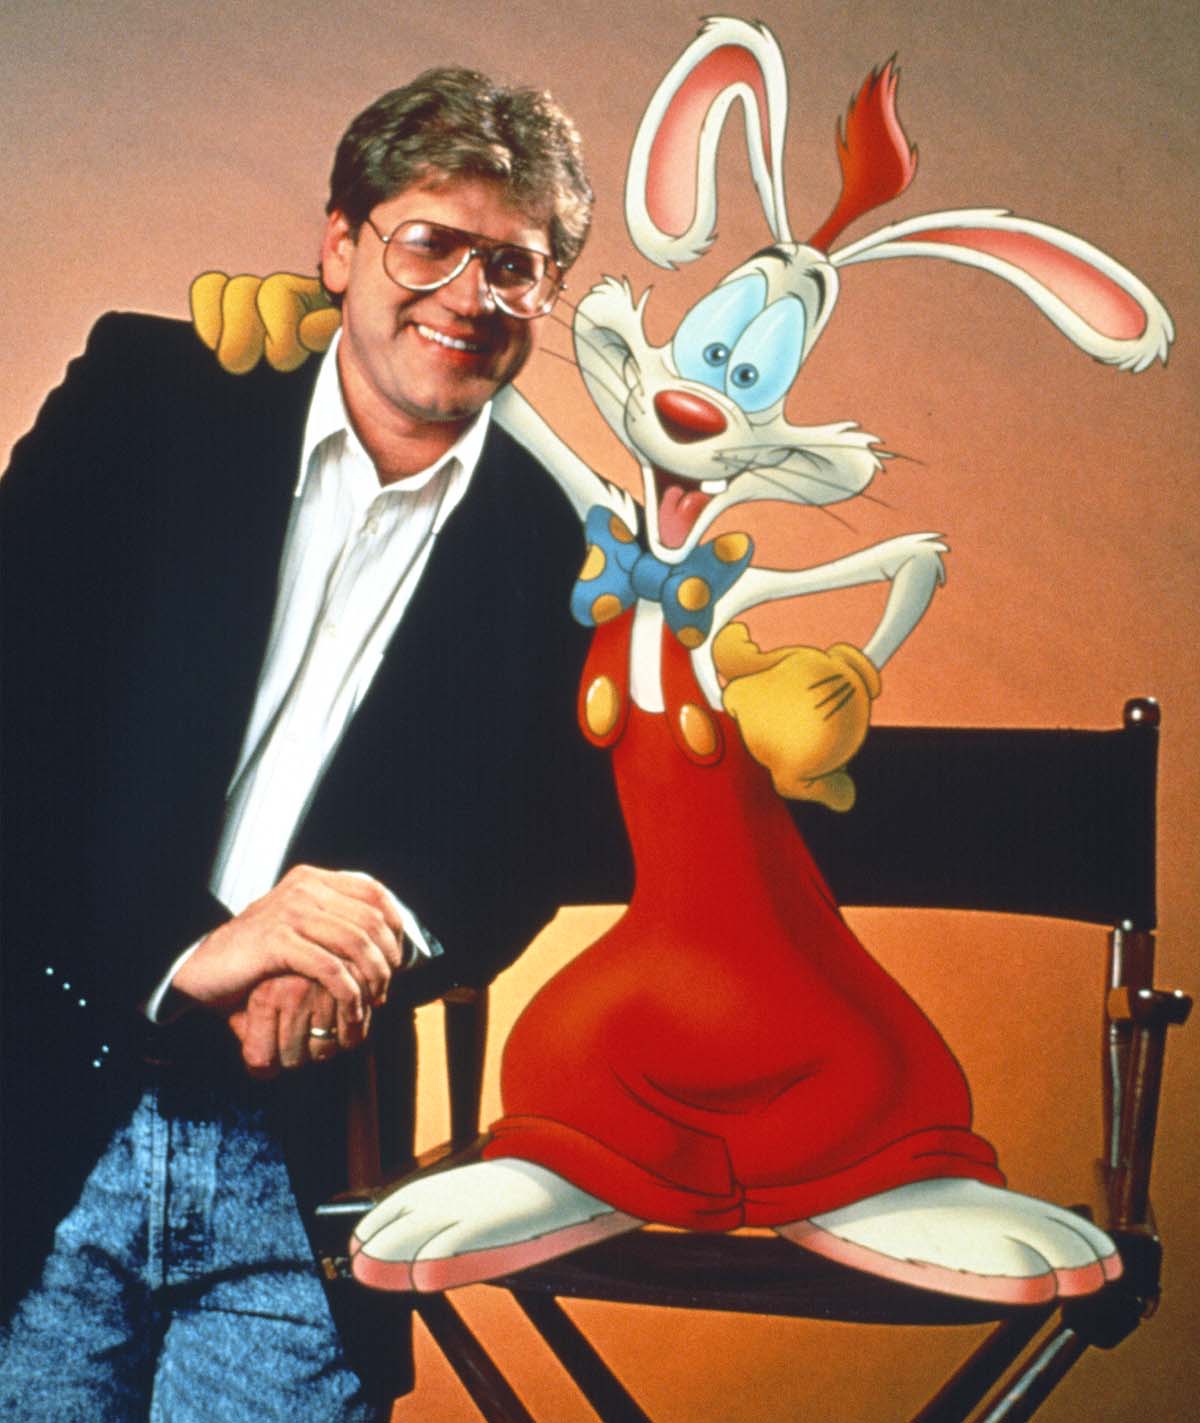 Who Framed Roger Rabbit HD wallpapers, Desktop wallpaper - most viewed